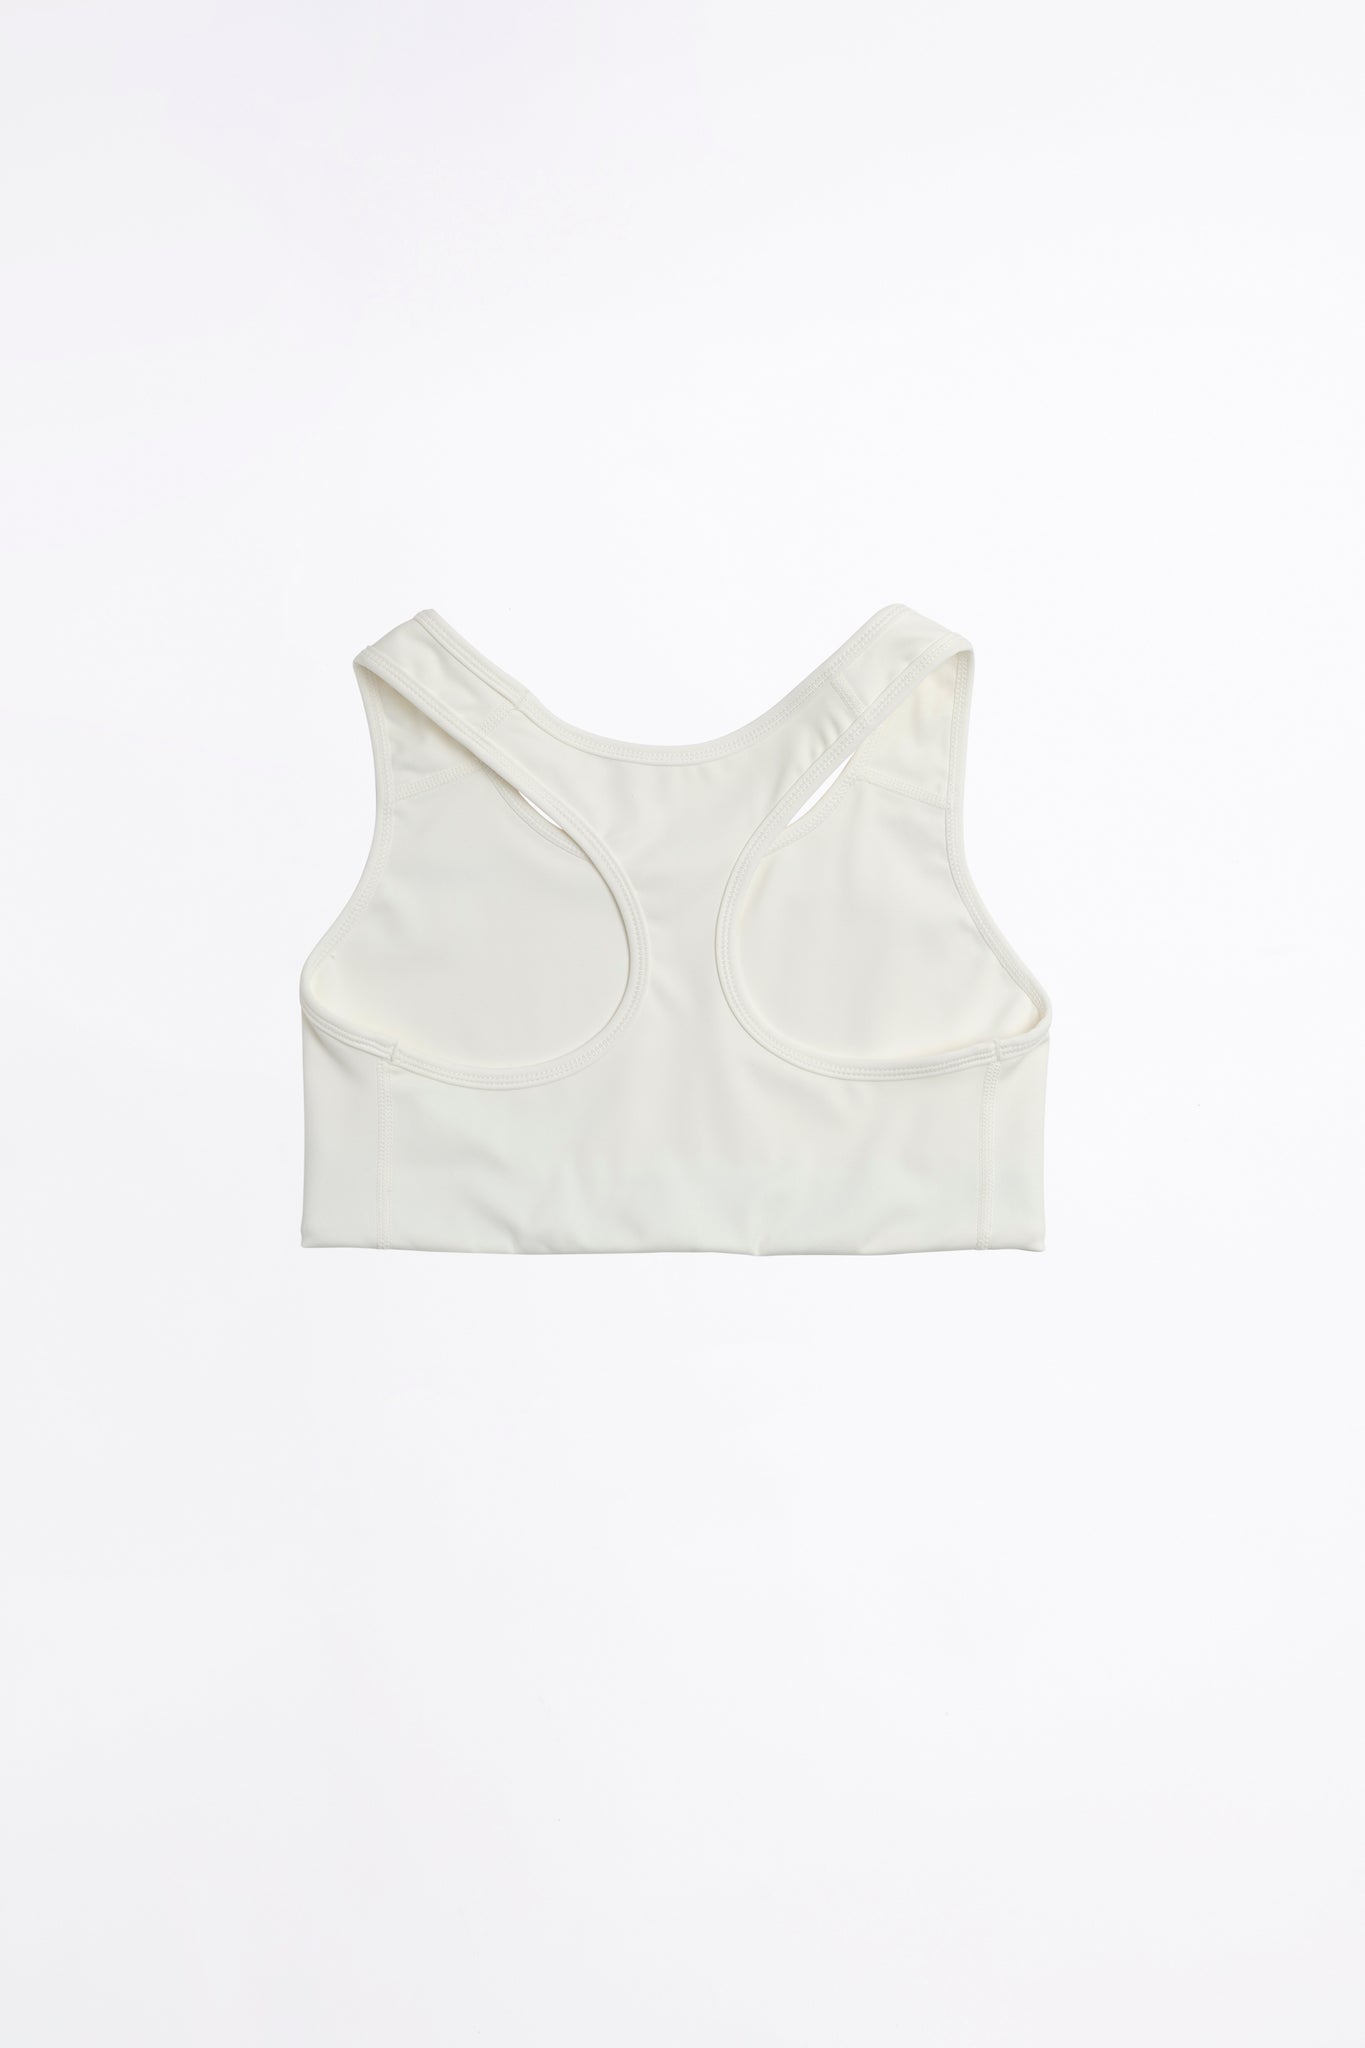 Women's sports bra PRO white